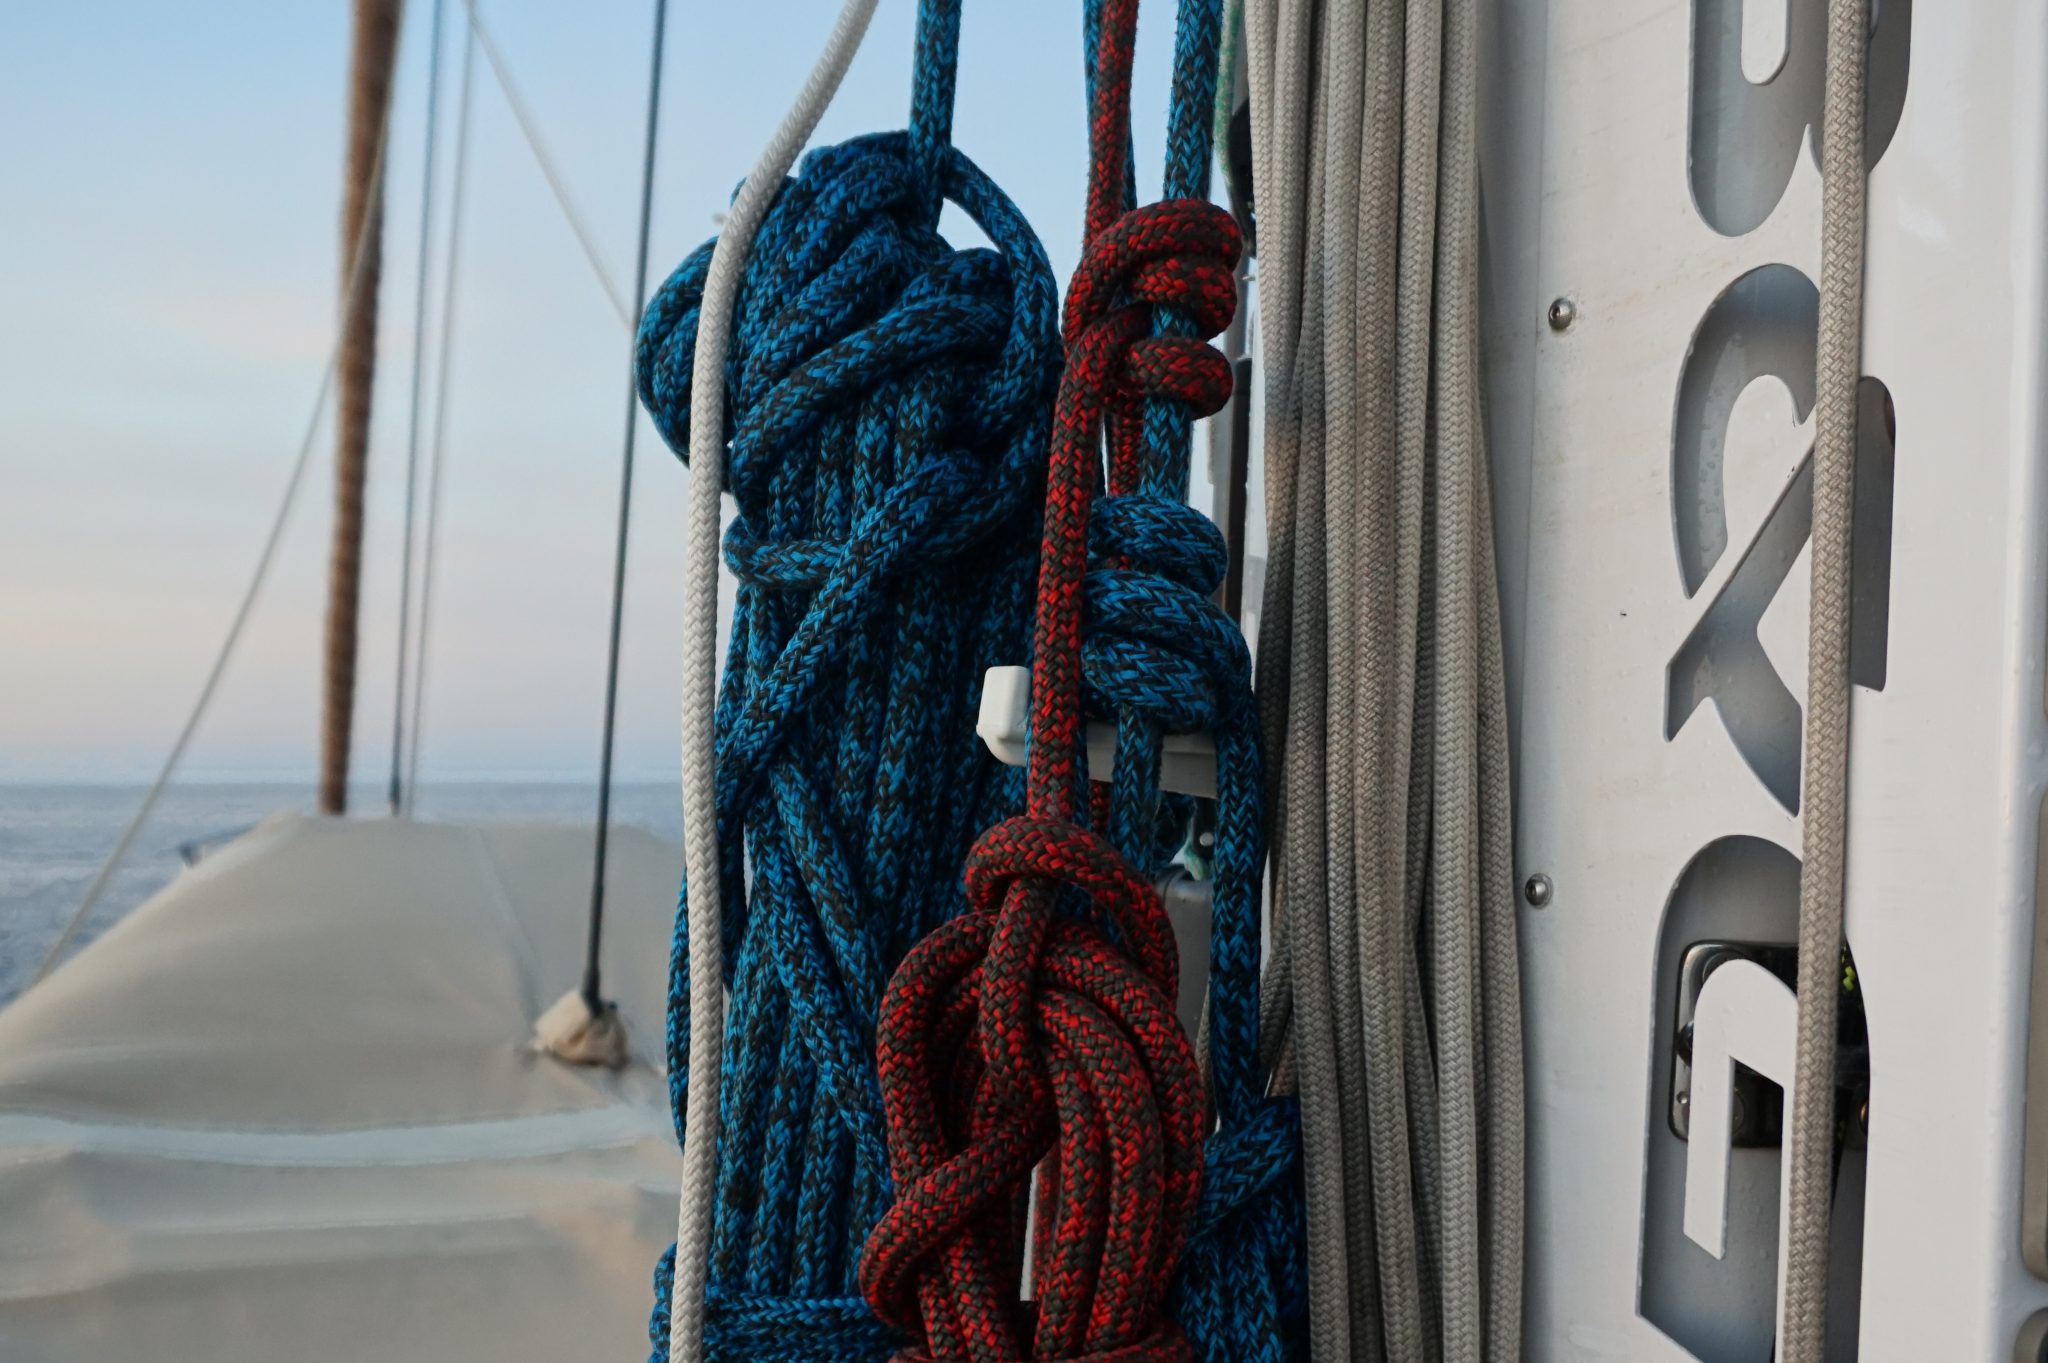 Yacht rope